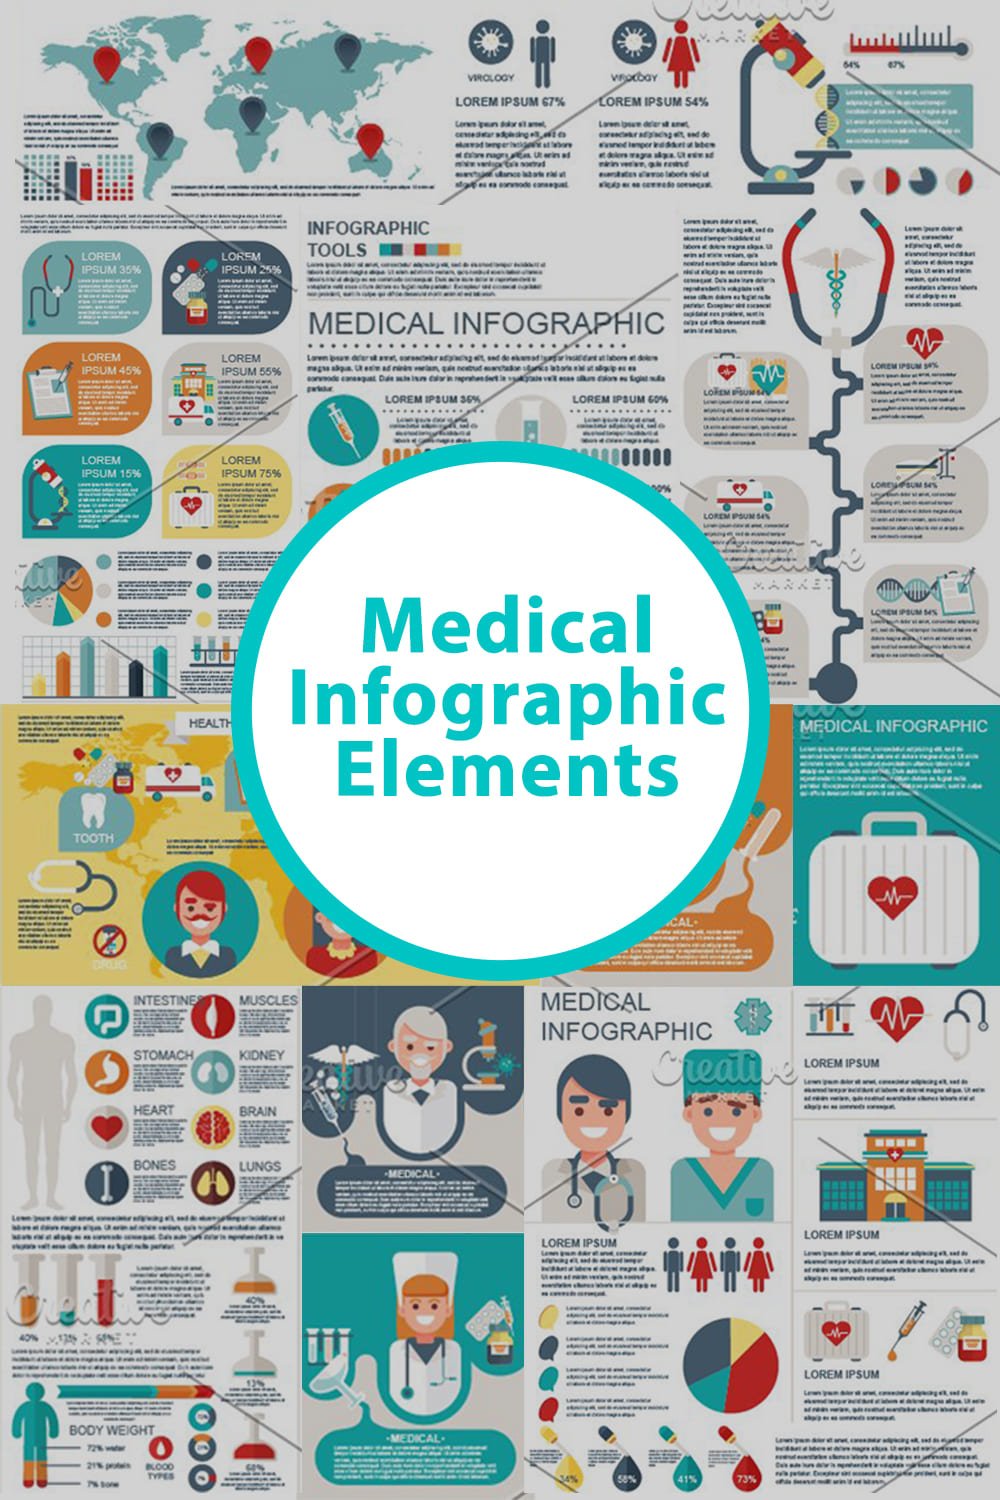 Medical Infographic Elements Pinterest.